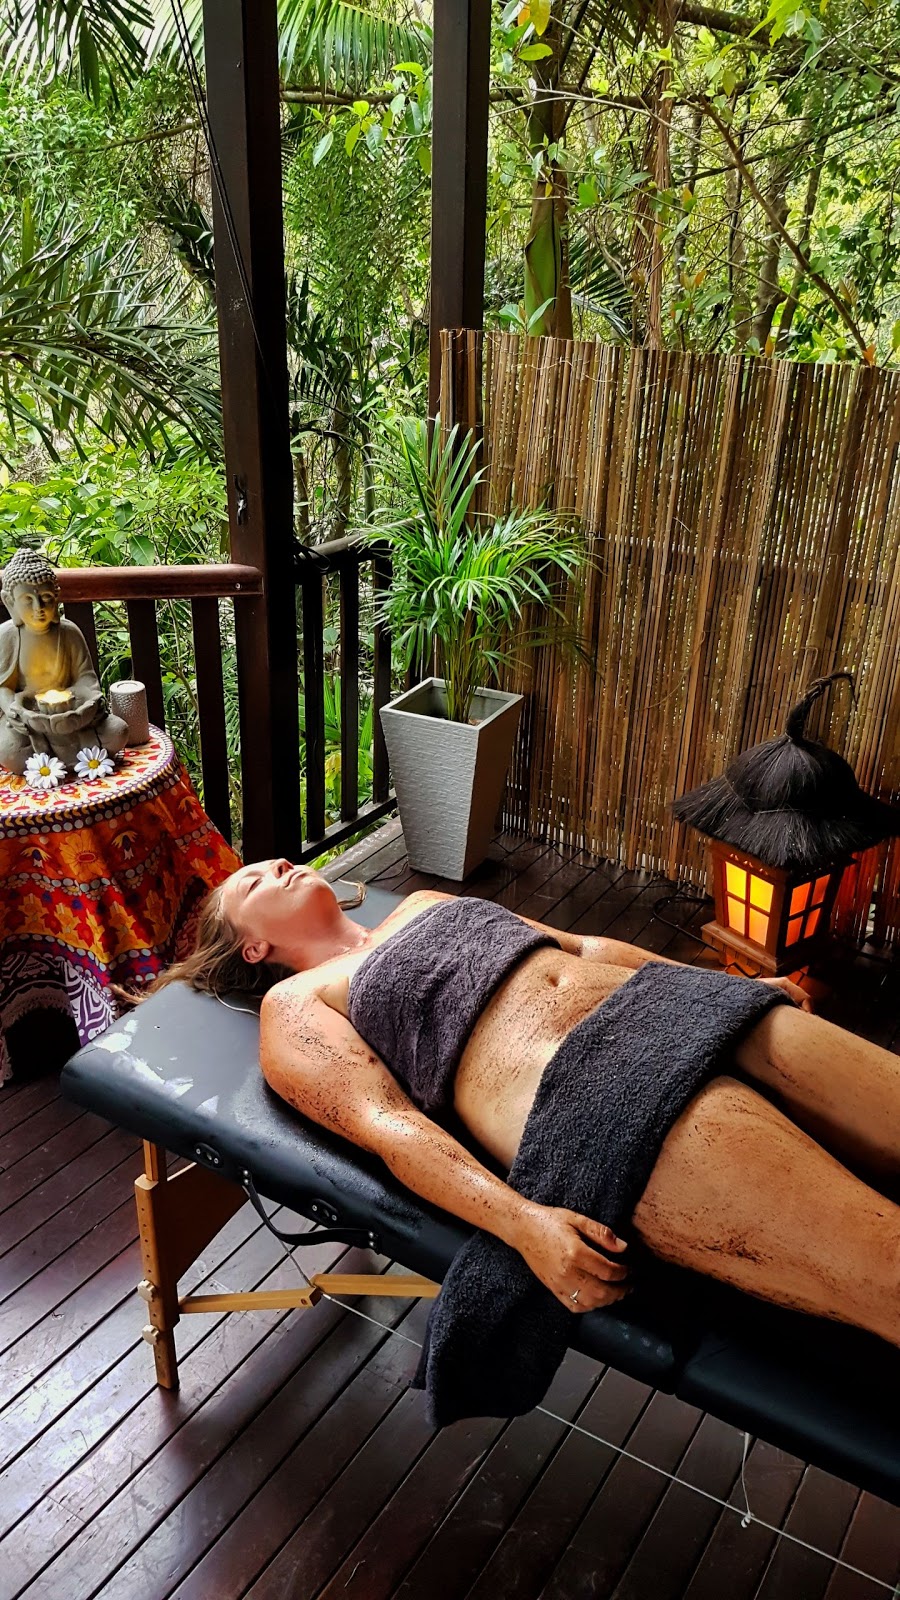 Canopy Massage & Day Spa | 139 Sydney St, Bayview Heights QLD 4868, Australia | Phone: 0449 832 665